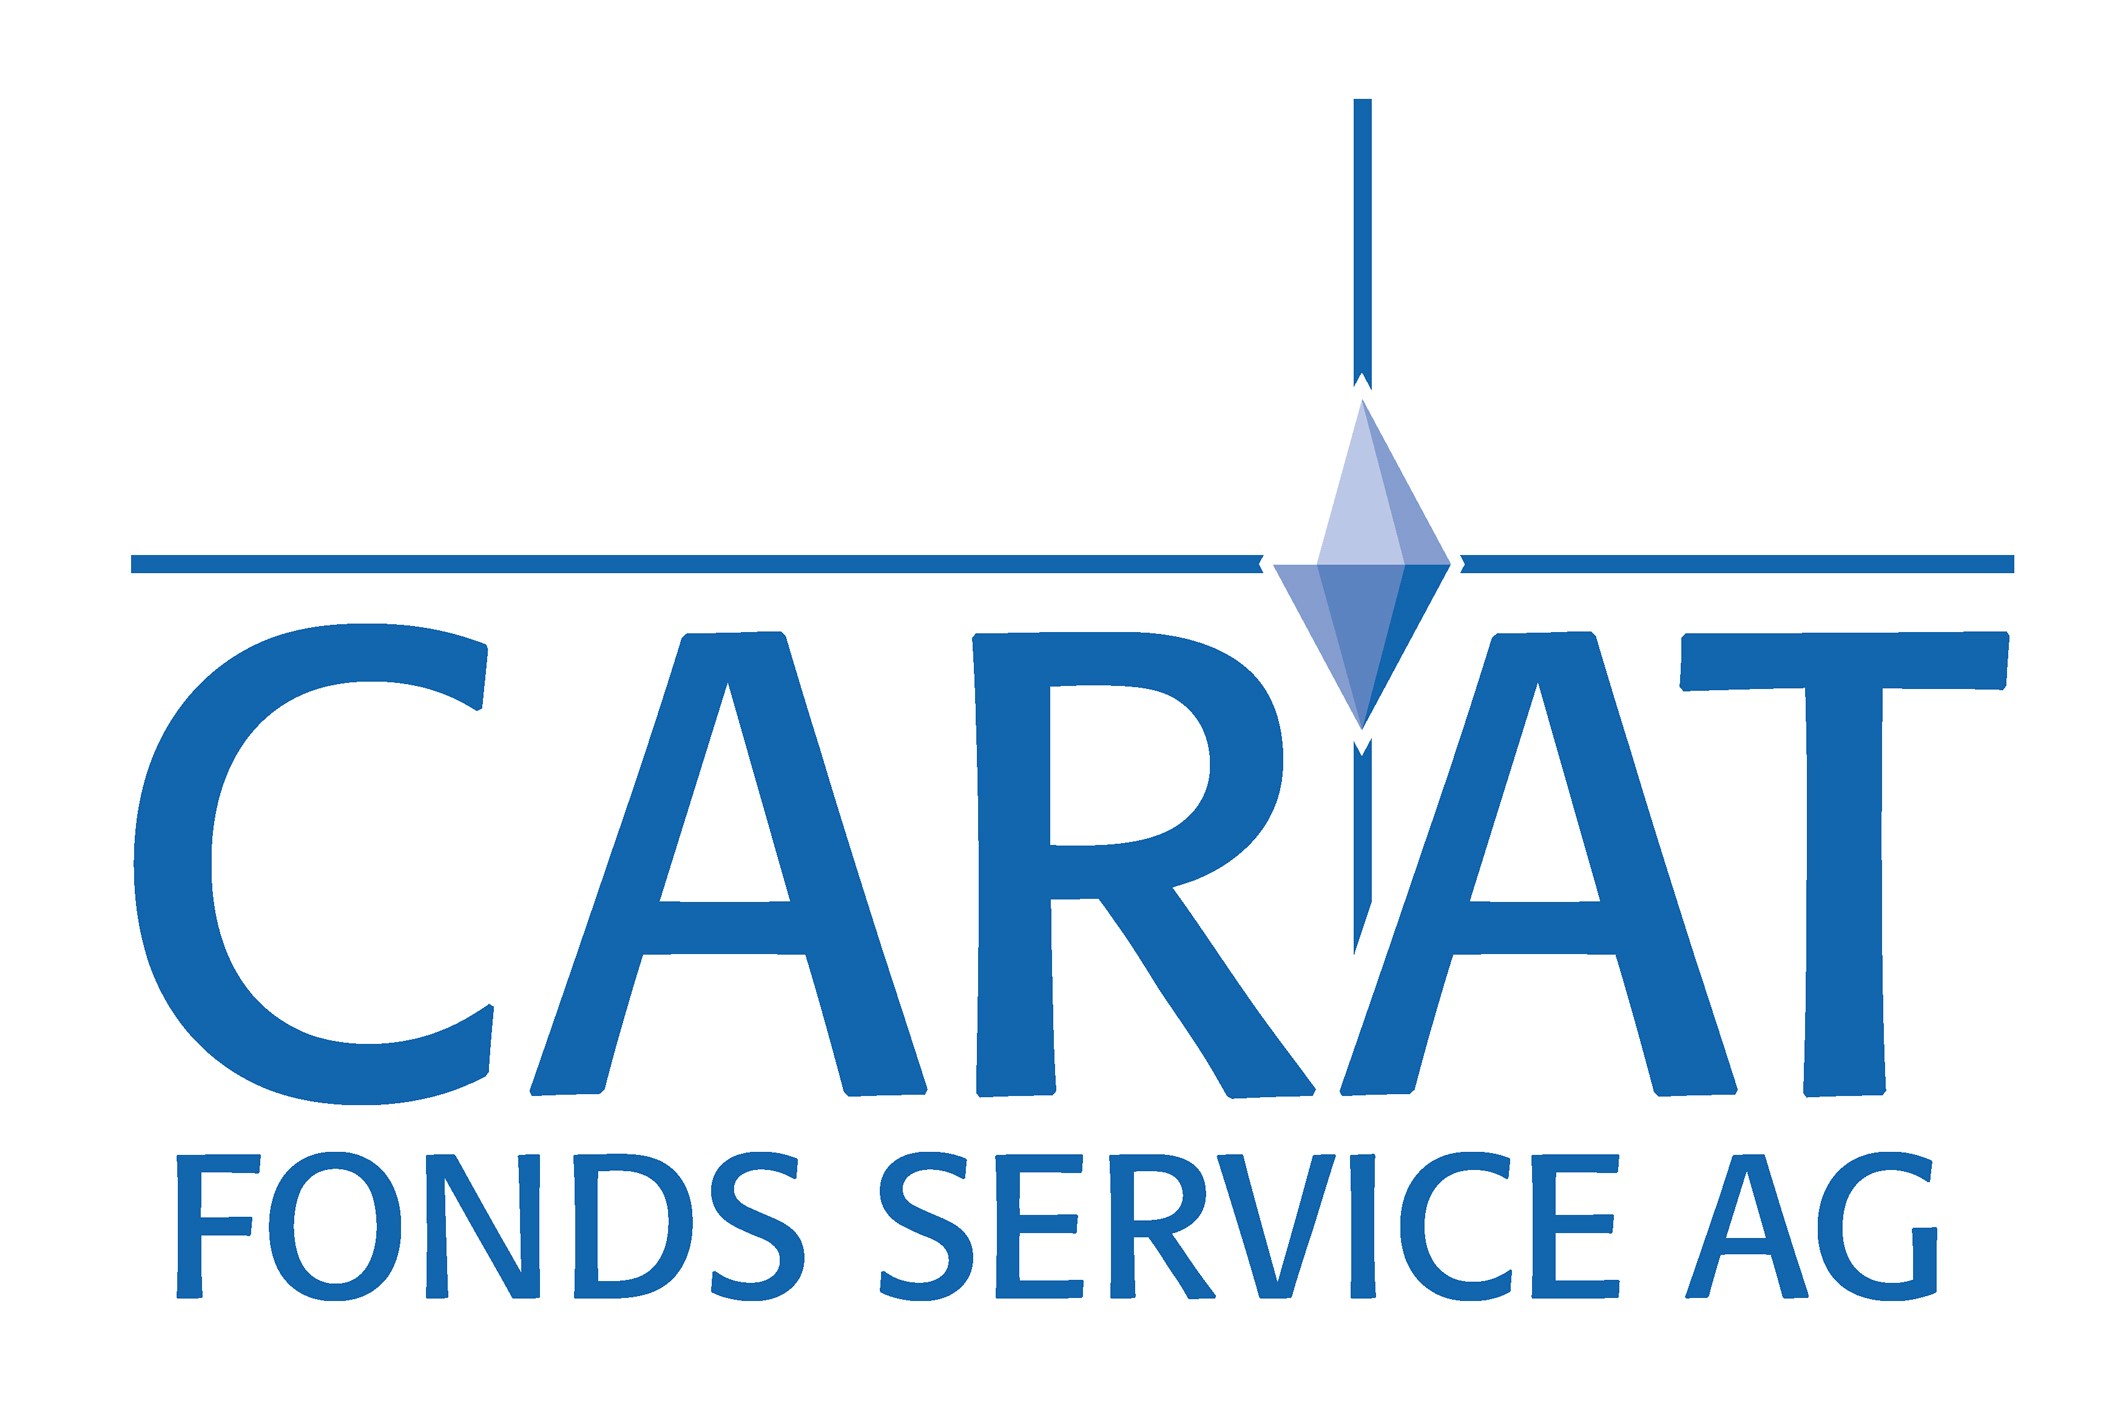 Logo Carat Fonds Service AG